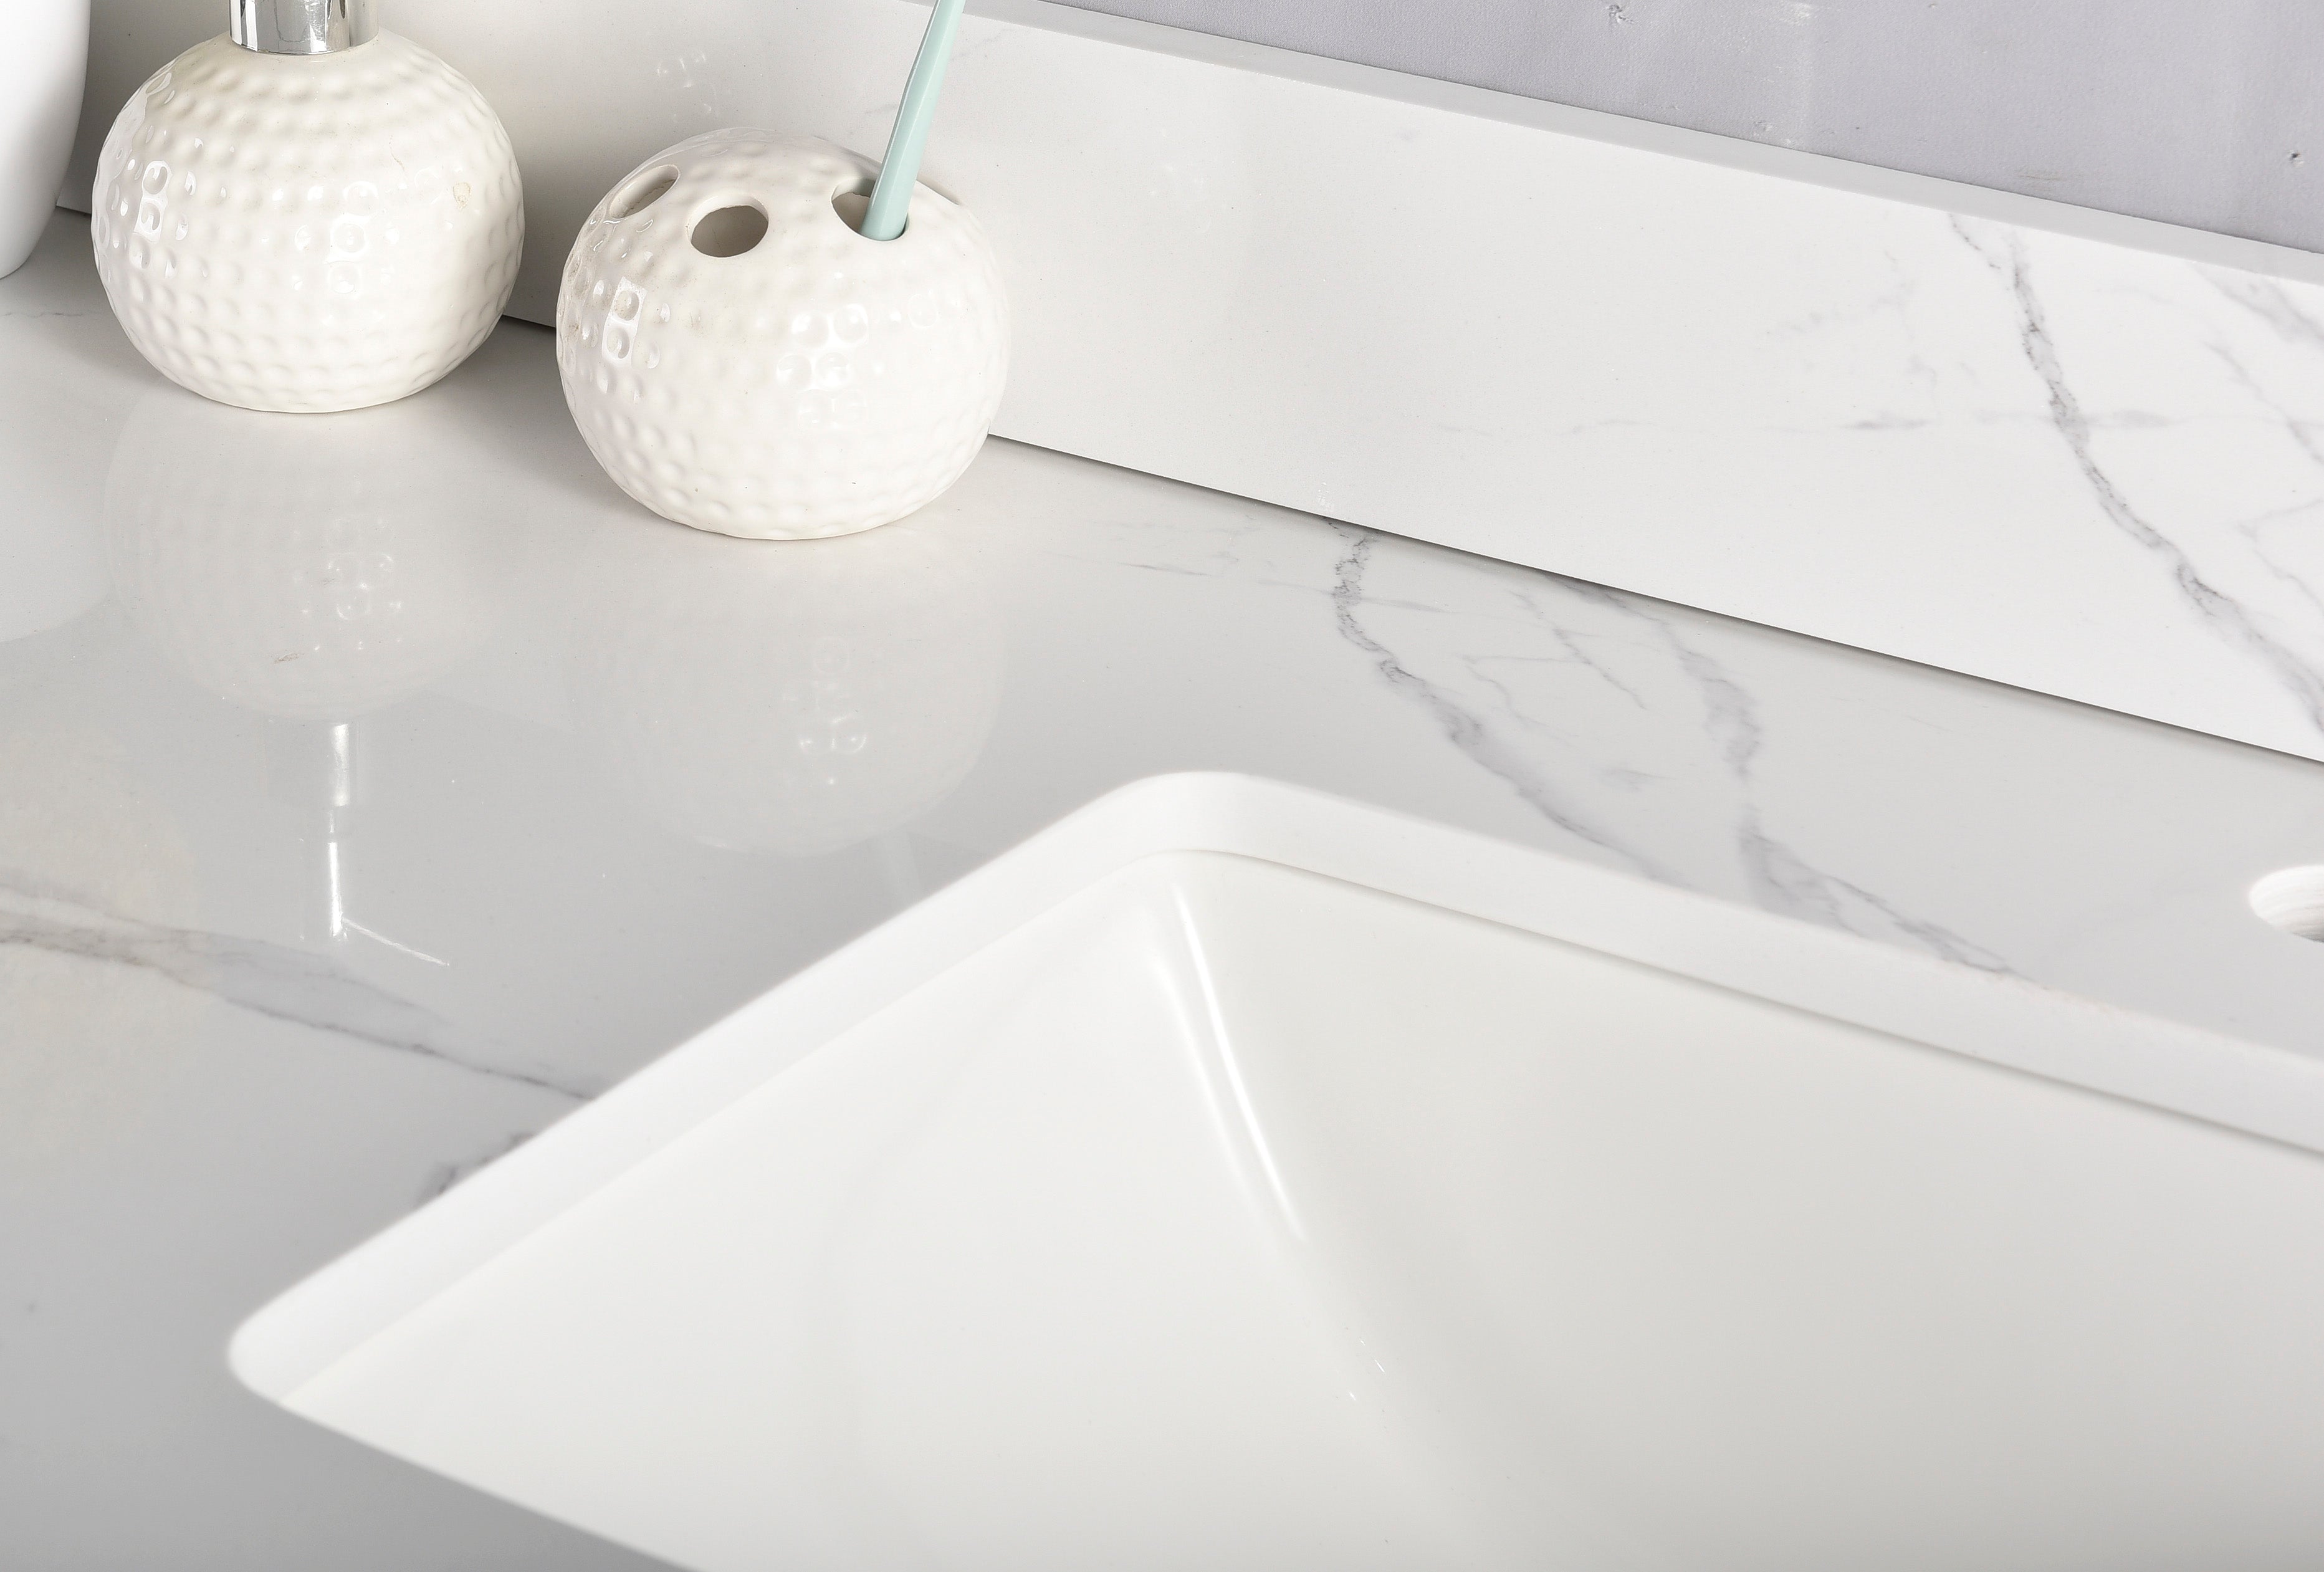 Serena 60″ Single Sink Free Standing Bathroom Vanity With Quartz Countertop - Bhdepot 